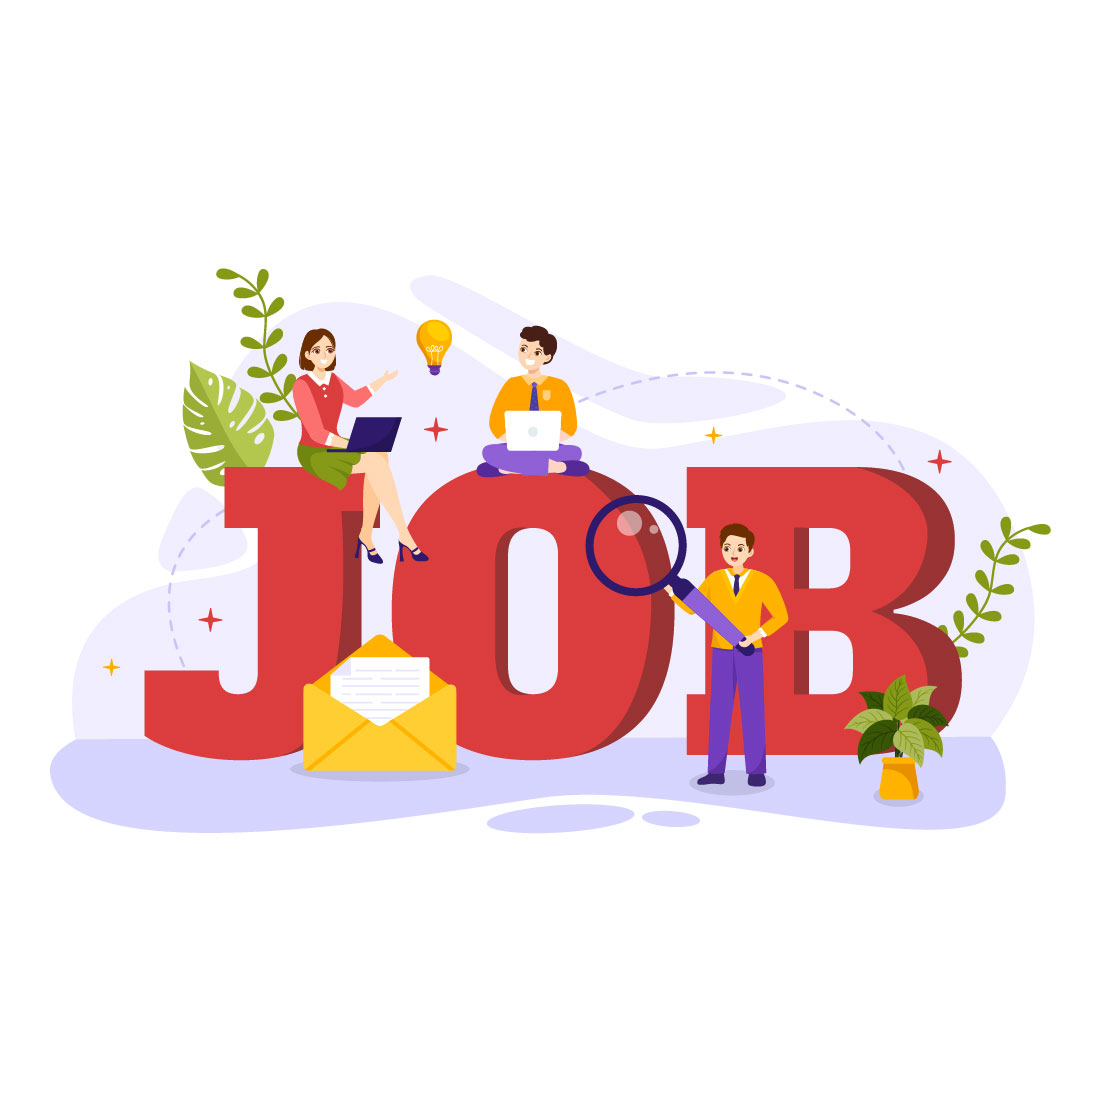 12 Job Recruitment Illustration preview image.